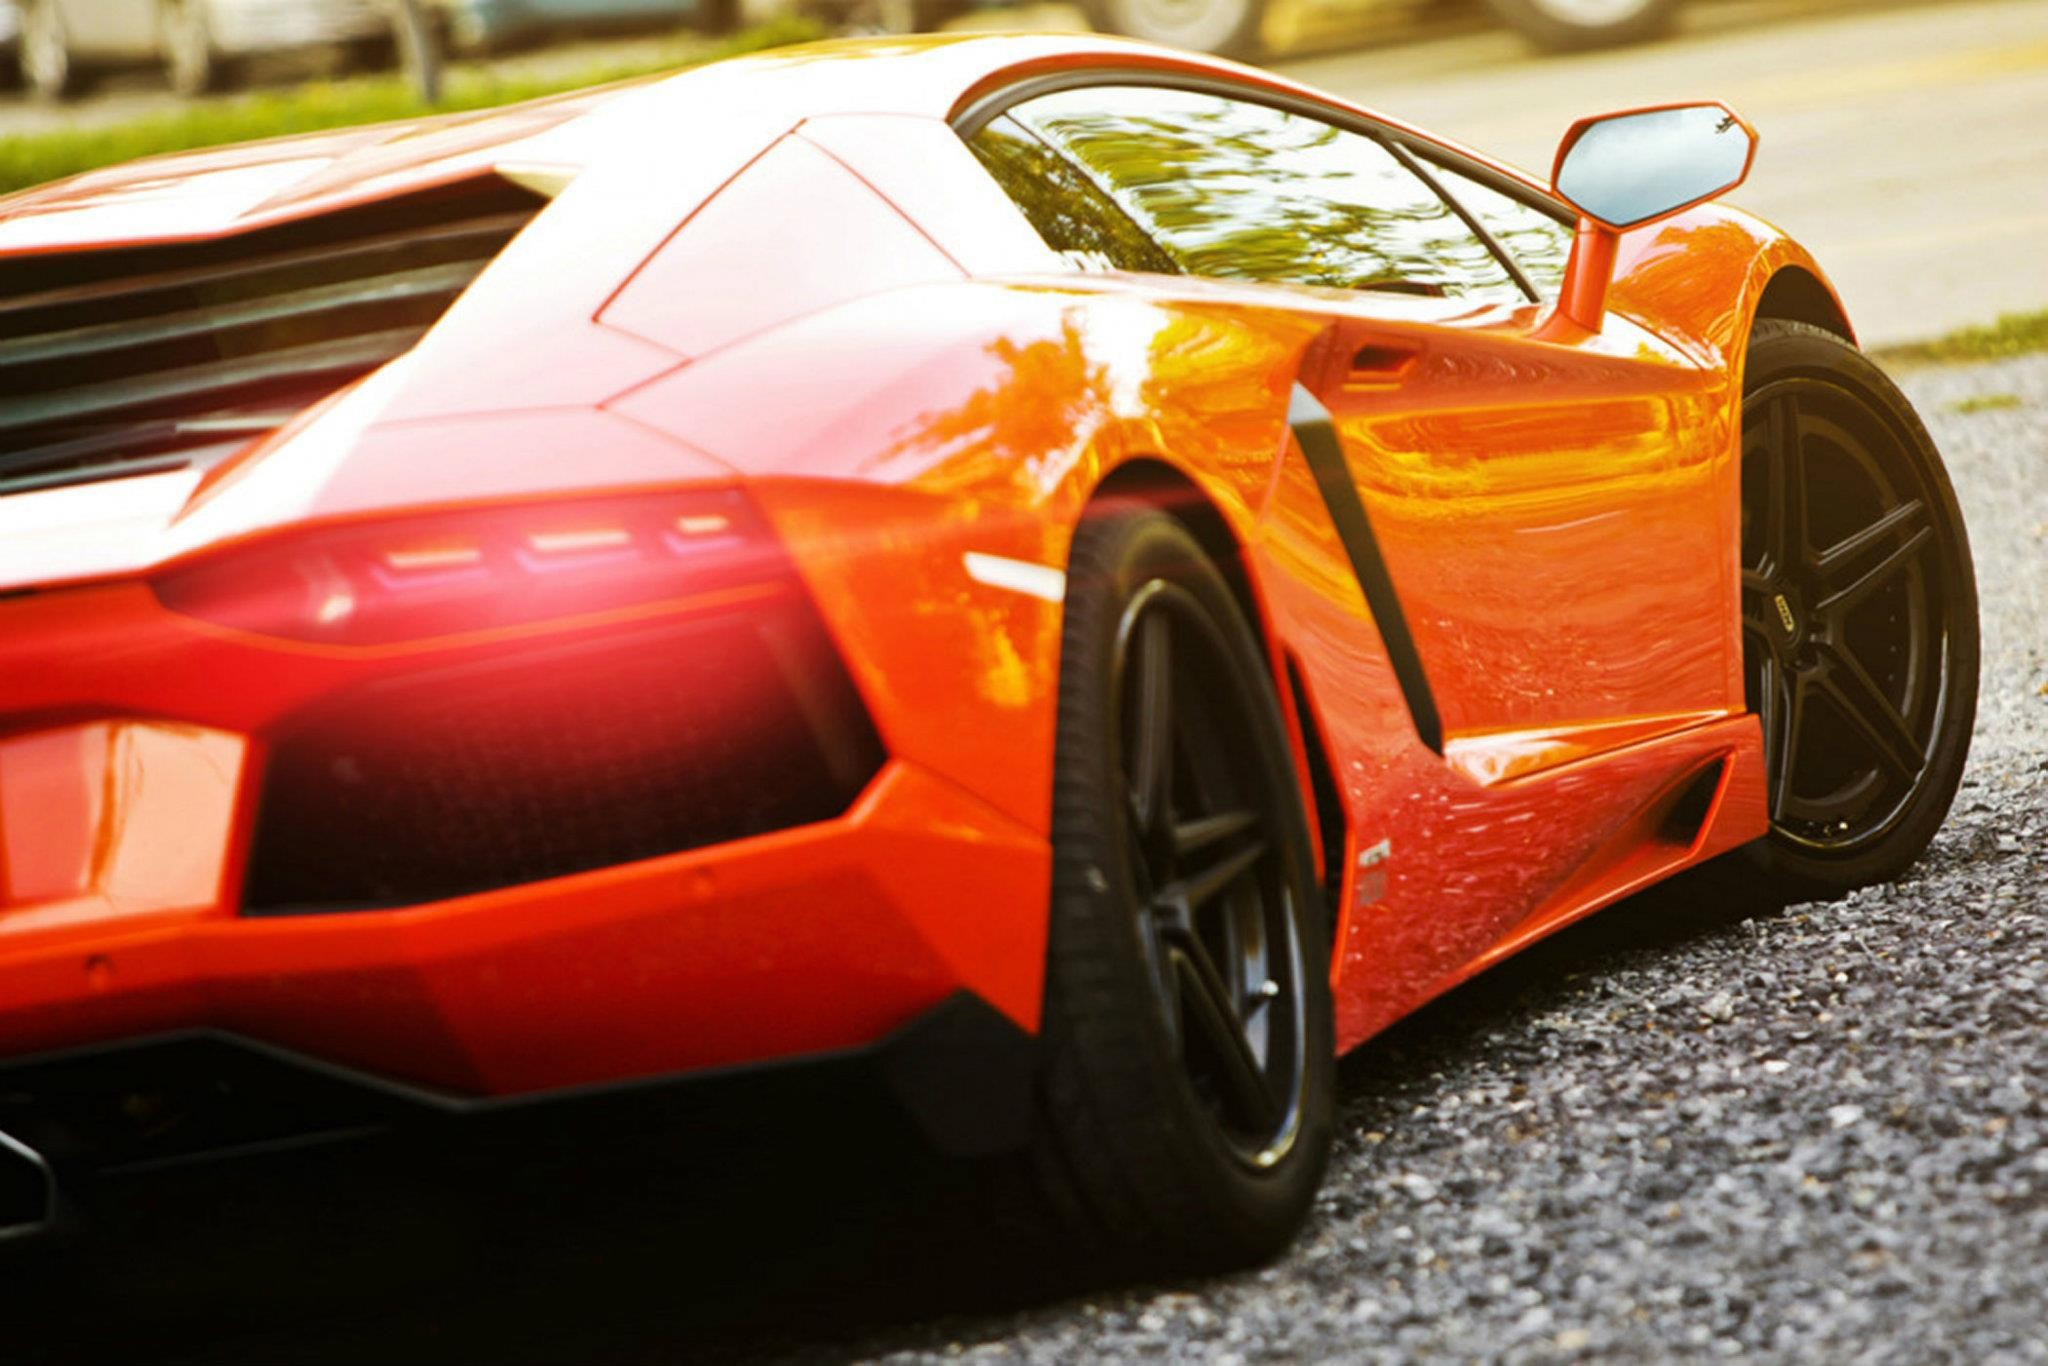 Laden Sie das Lamborghini Aventador Lp700 4, Lamborghini, Fahrzeuge-Bild kostenlos auf Ihren PC-Desktop herunter